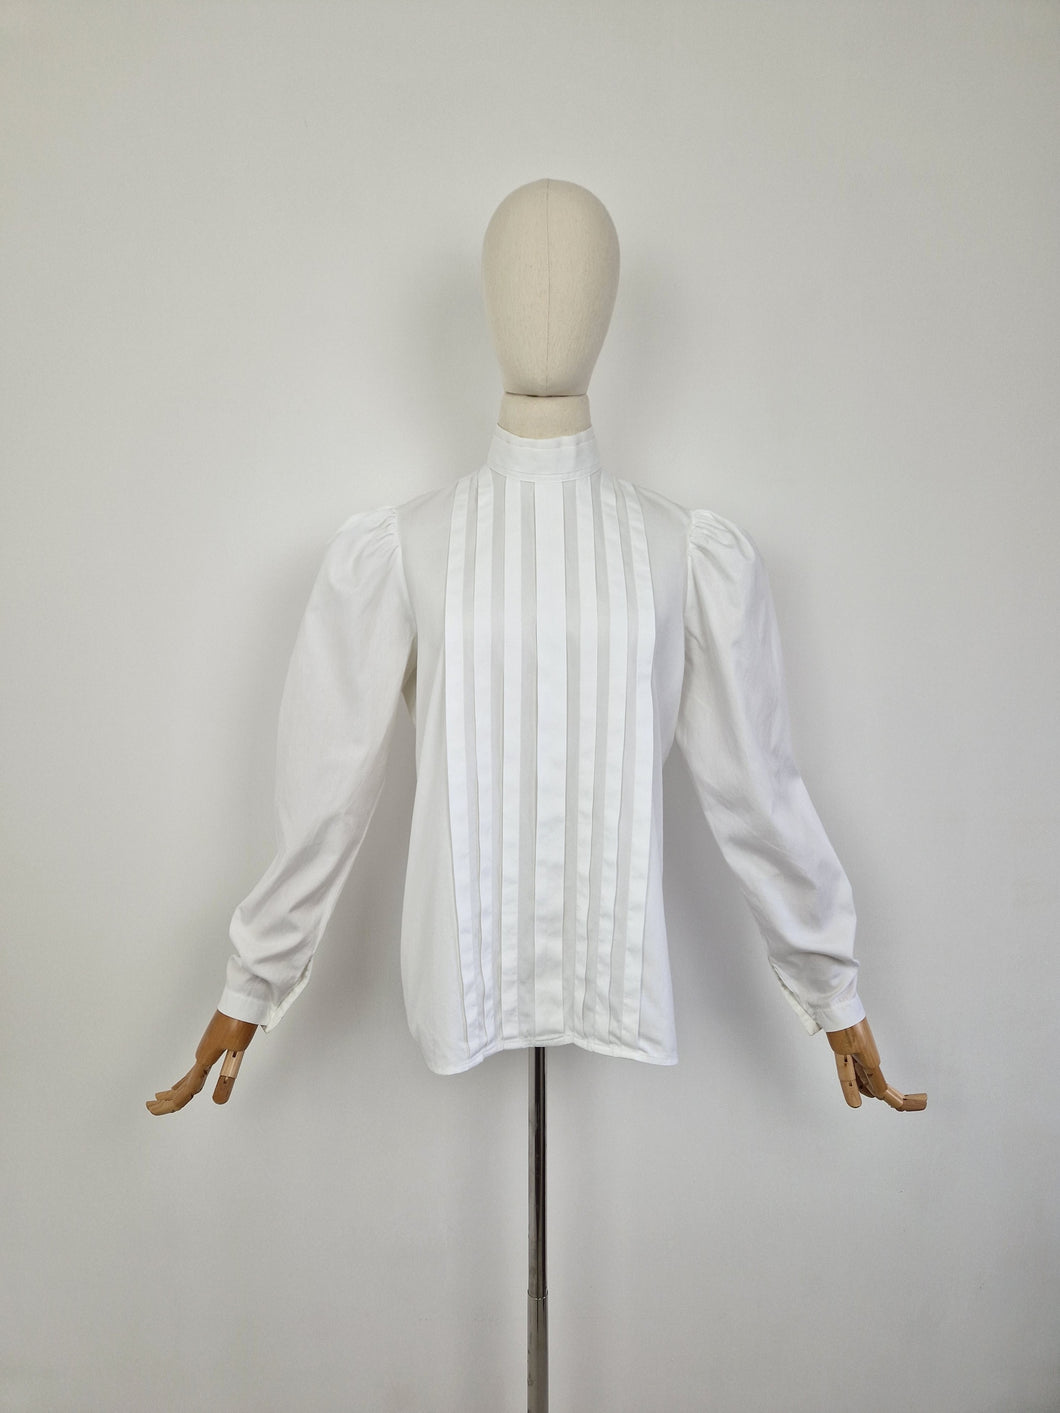 Vintage 80s Laura Ashley white blouse